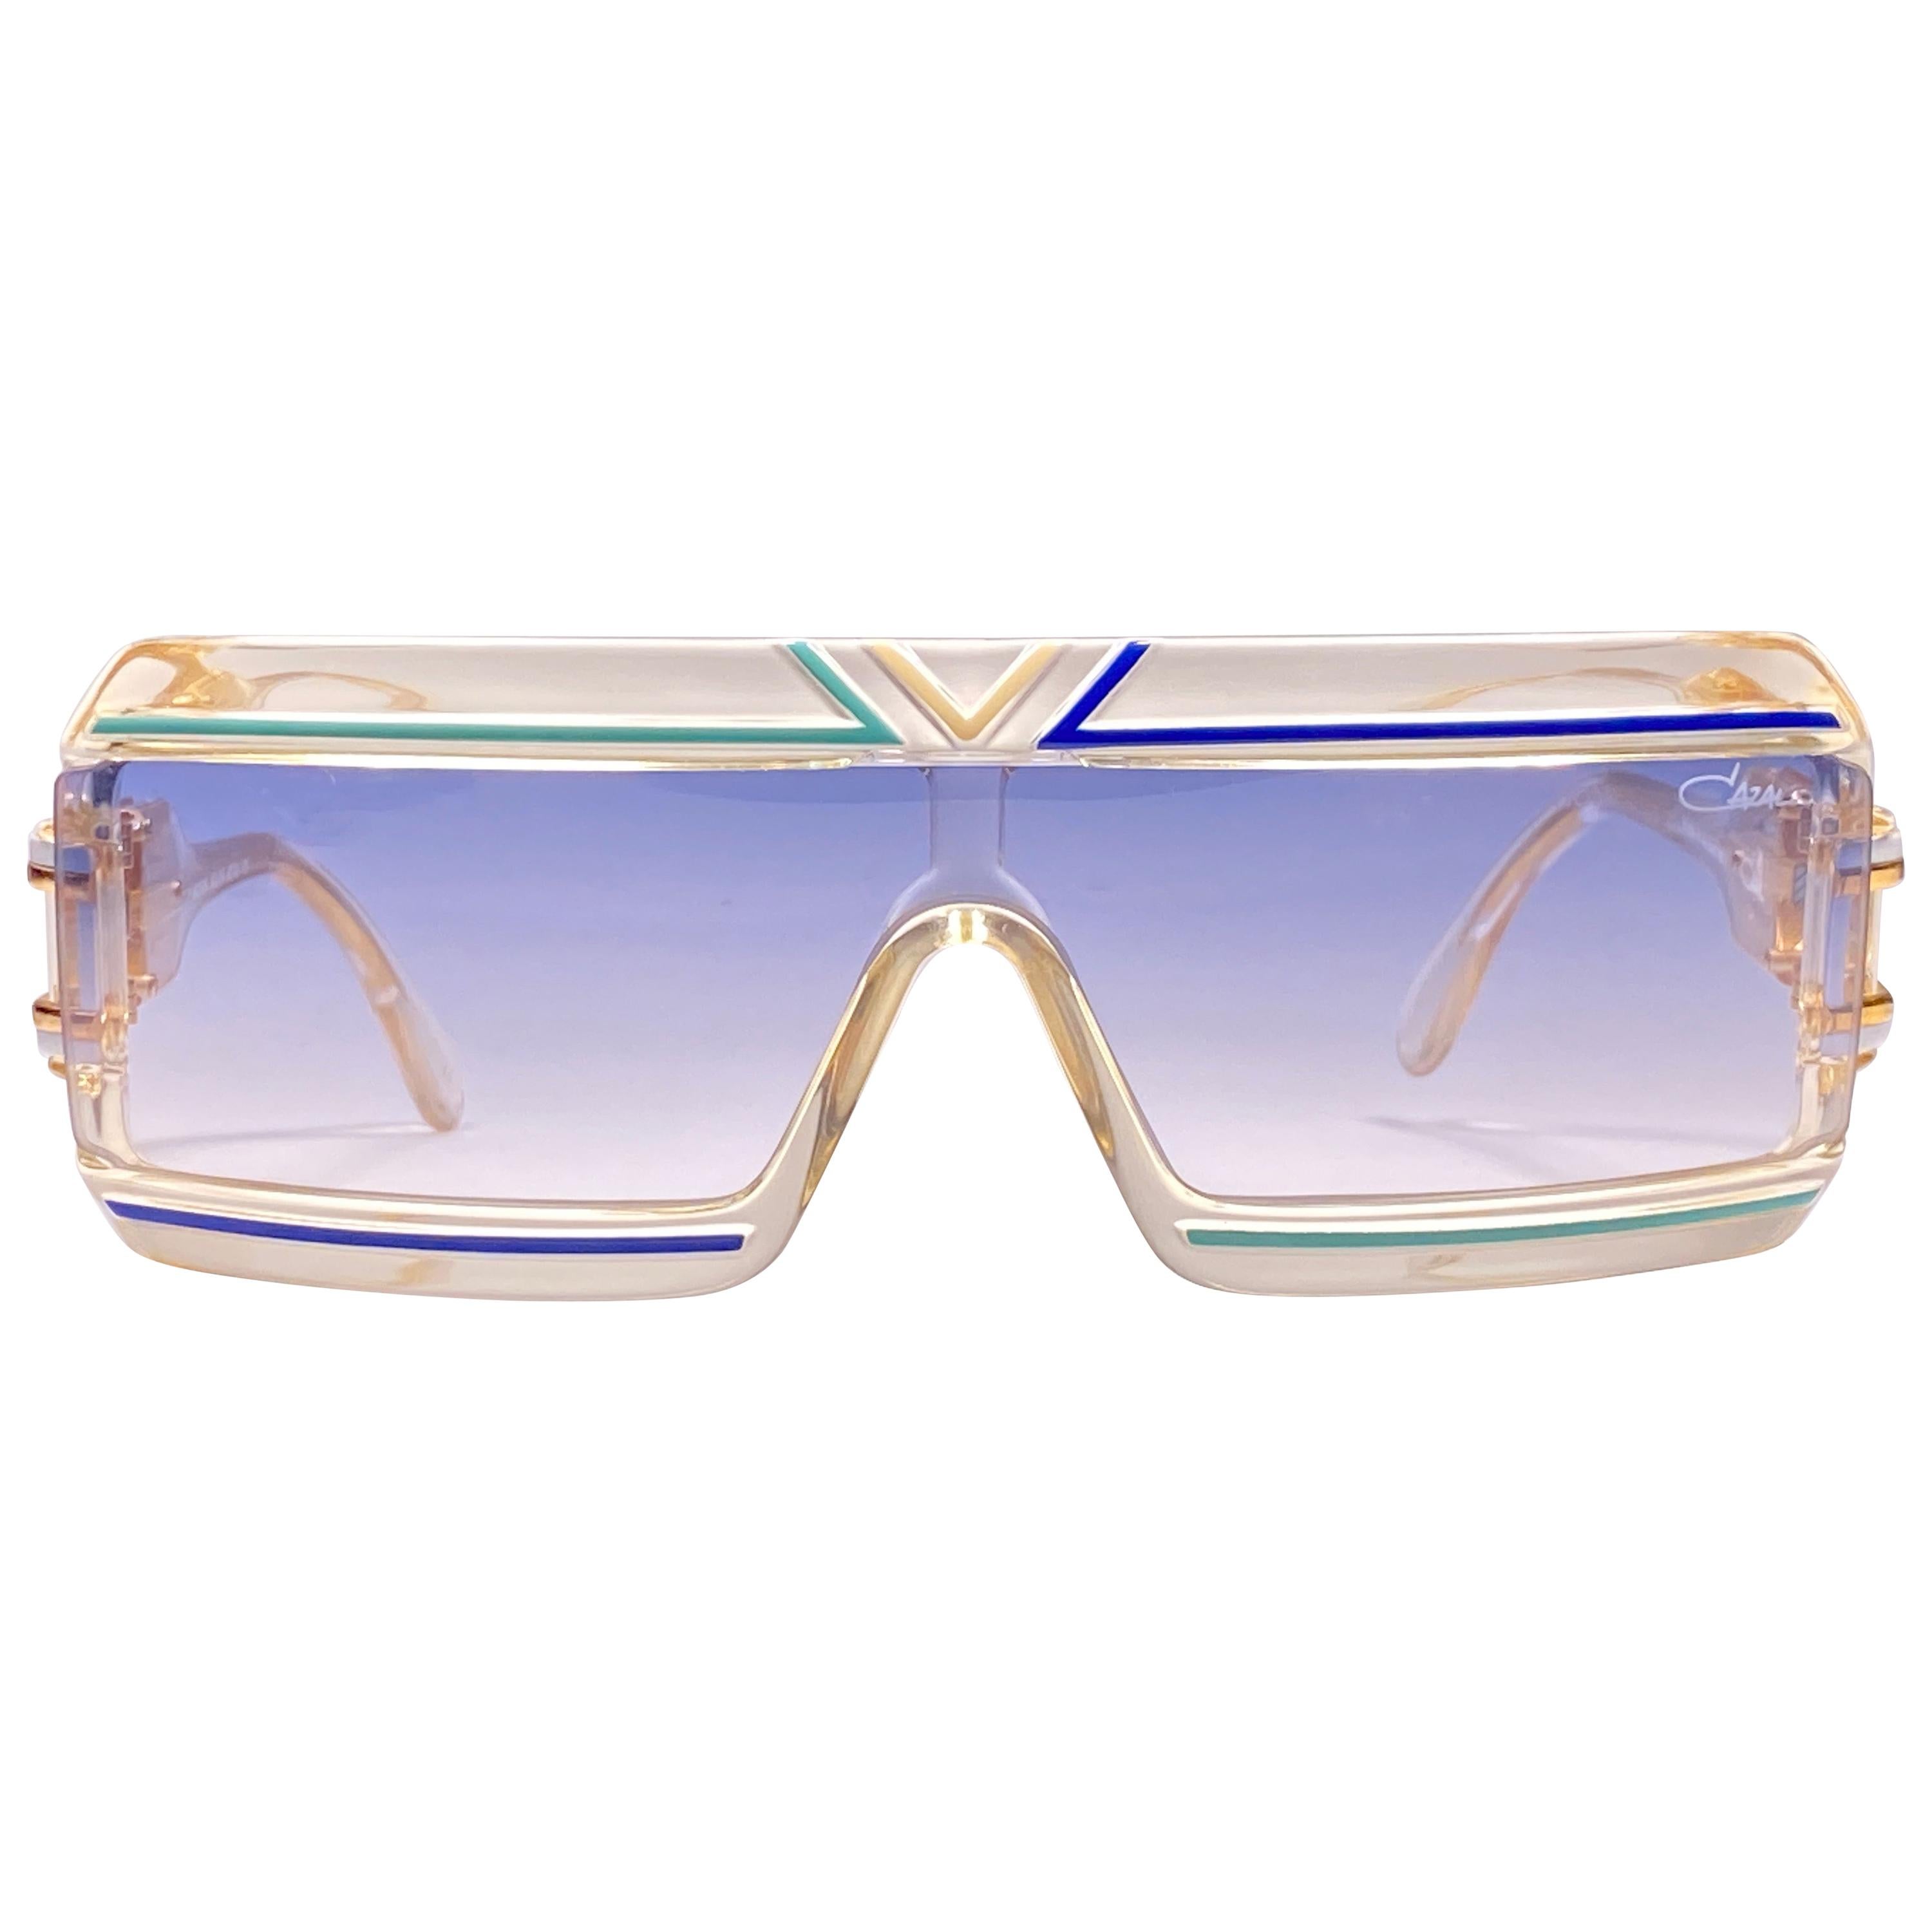 New Vintage Cazal 856 Translucent Frame Collectors Item 1980's Sunglasses